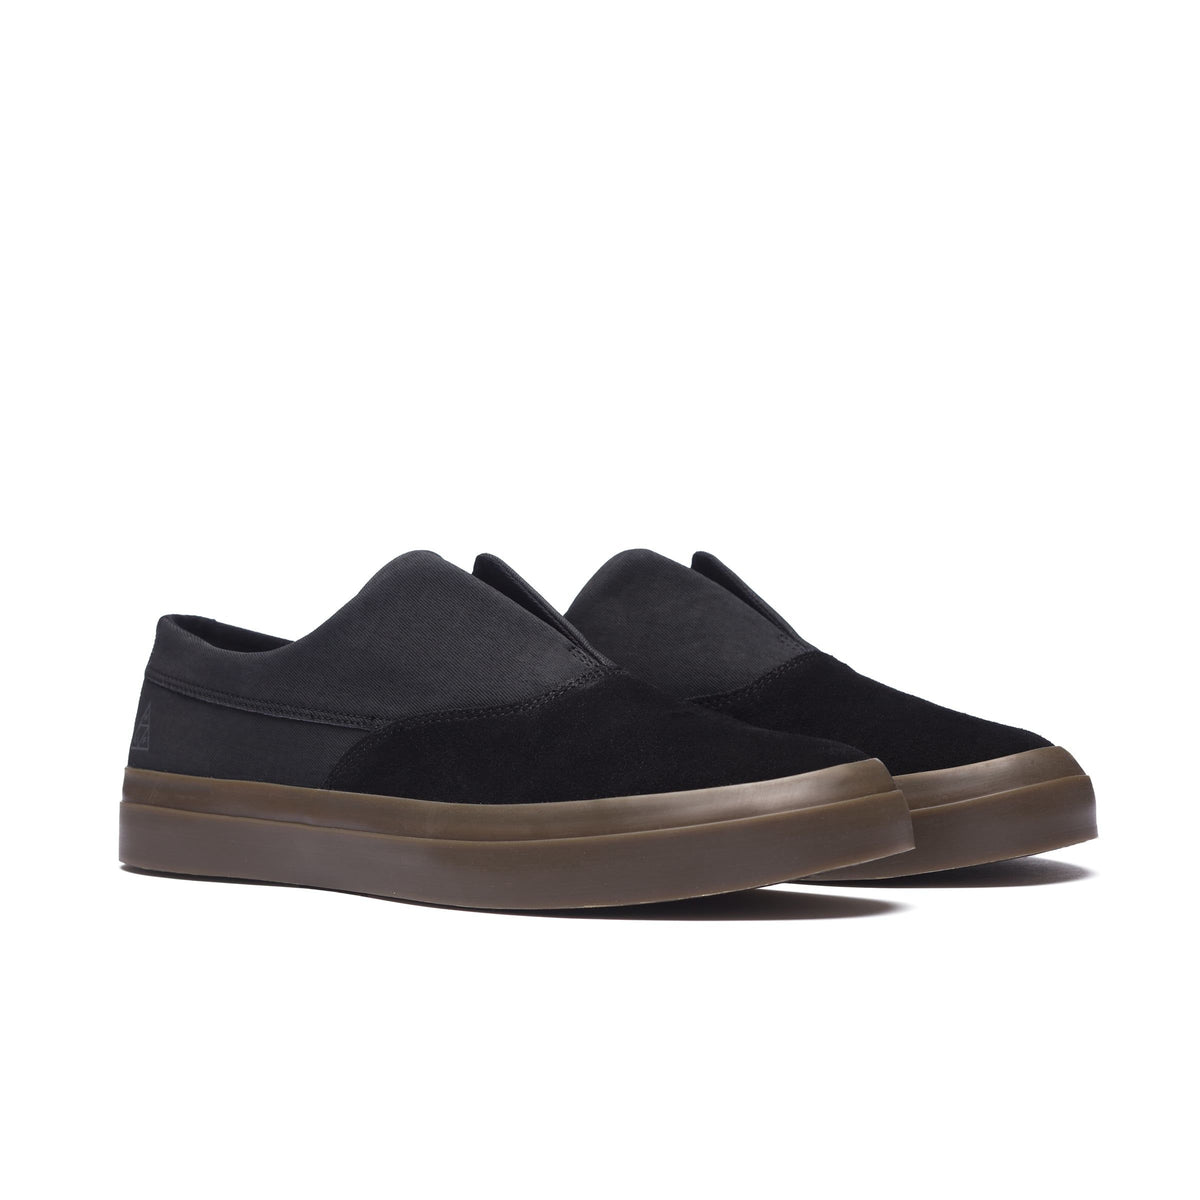 Huf Shoes Dylan Slip On - Black/Dark Gum